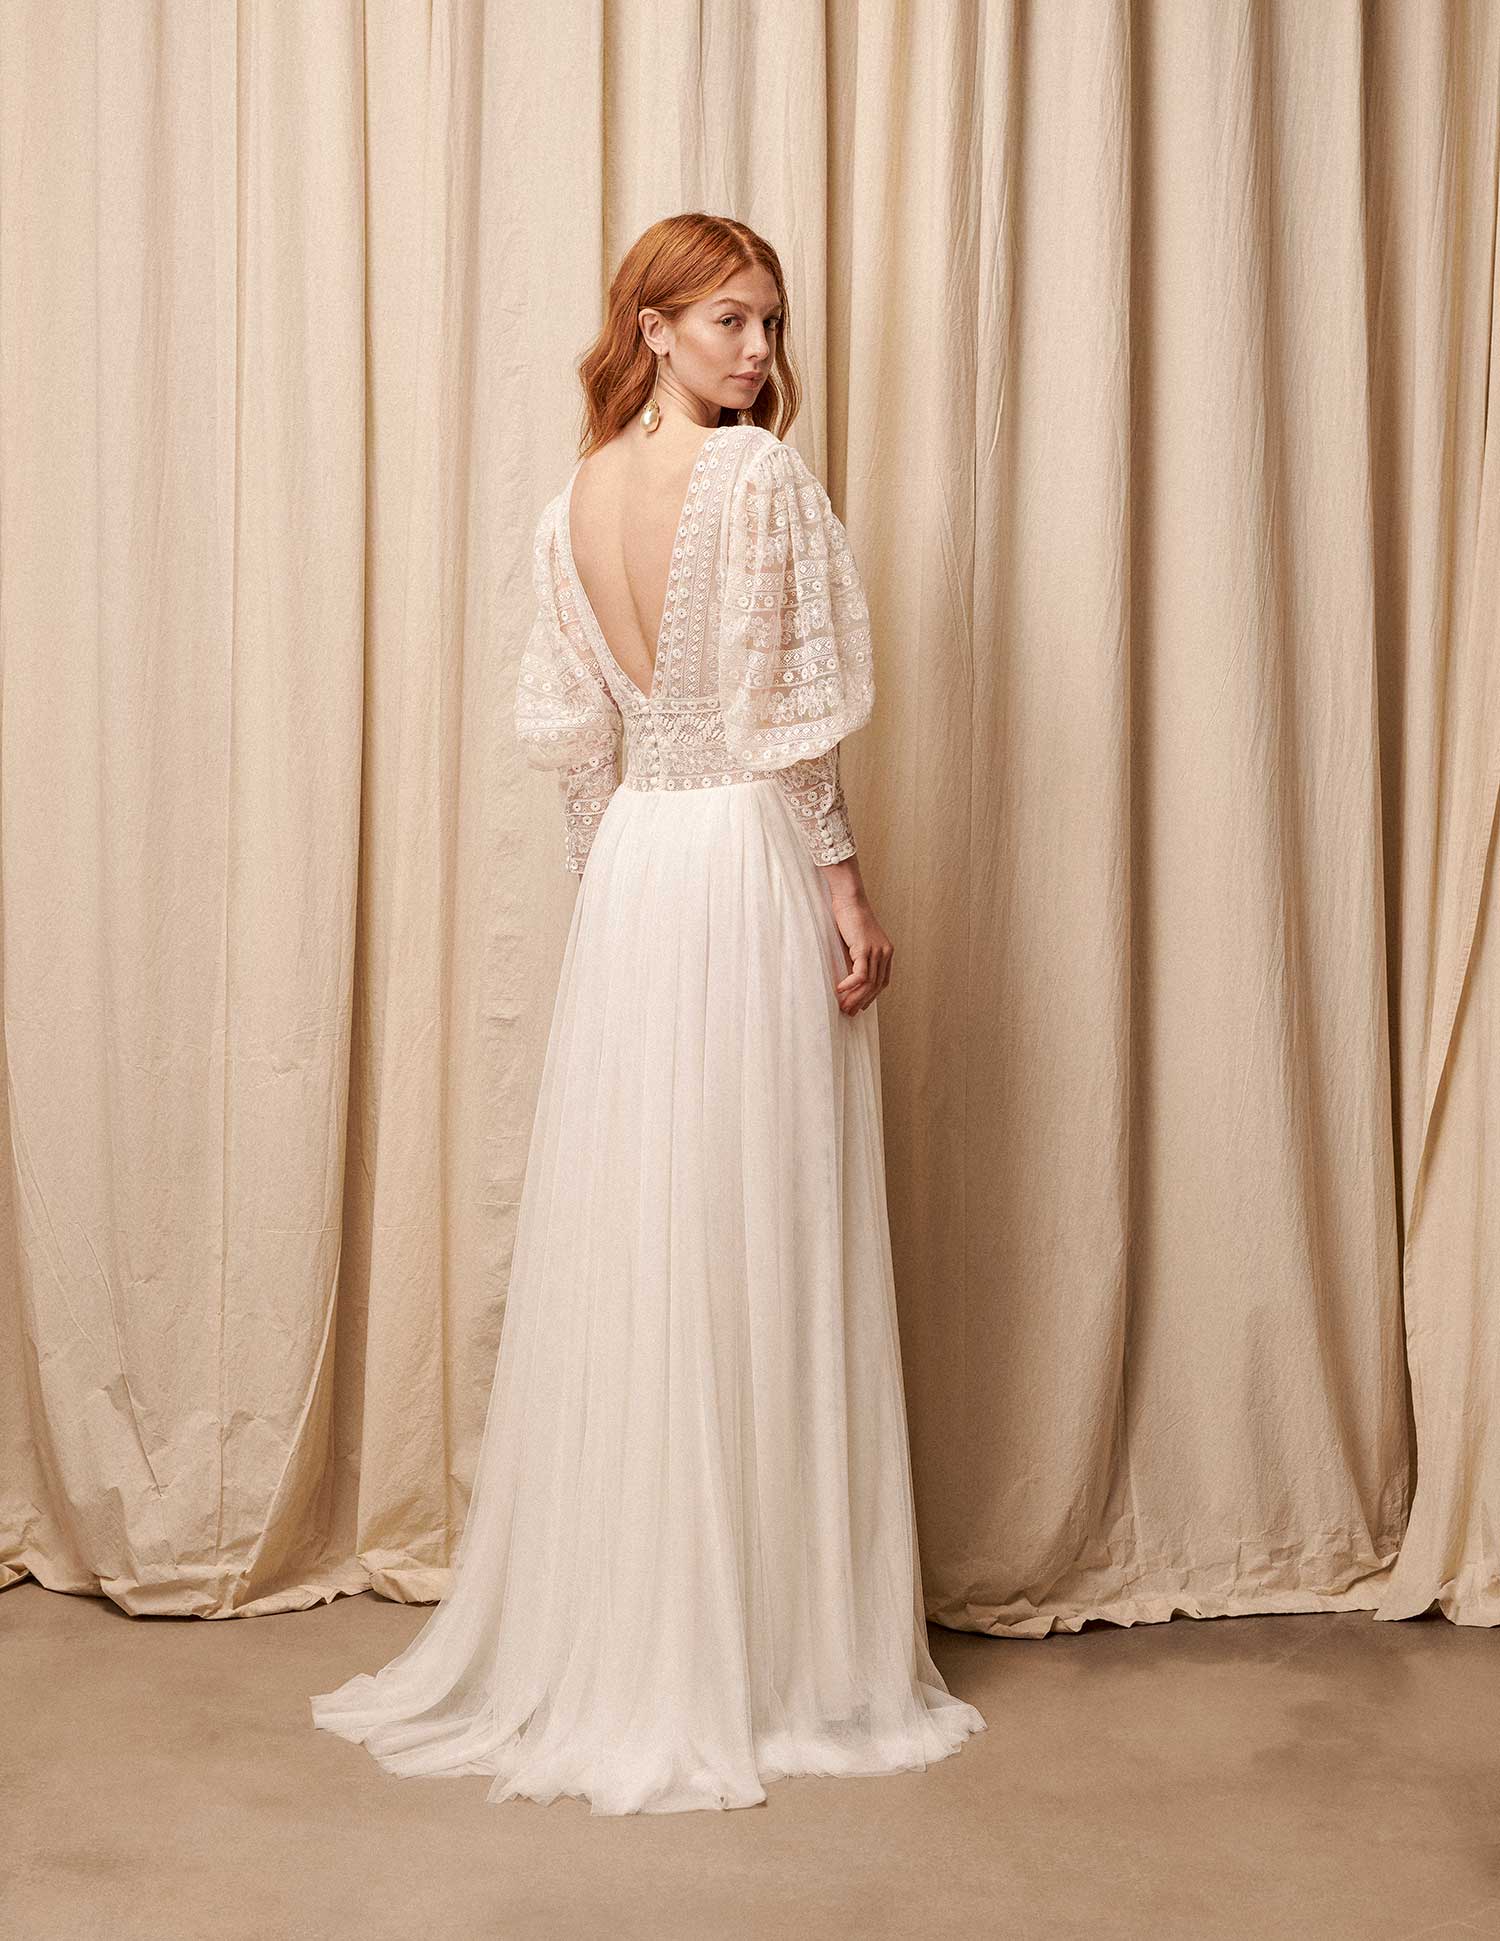 Atelier Manon Pascual - Collection robe de mariée Prêt à Porter Marylise & Rembo Styling 2021 - Caroline